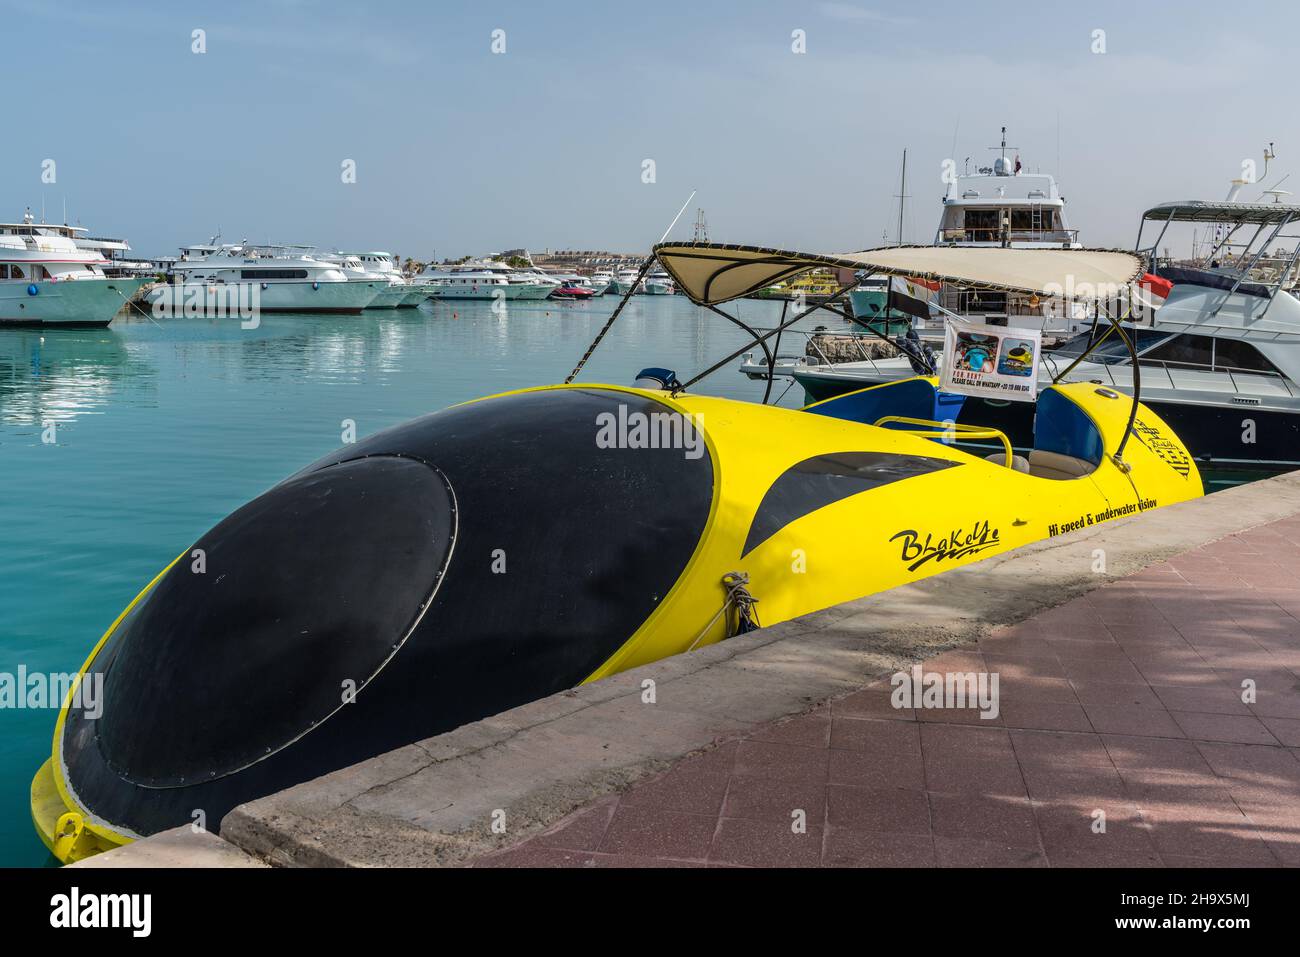 Hurghada, Egypt - May 31, 2021: The semi submarine glass speed boat at the pier of New Marina in Hurghada, popular beach resort town along Red Sea coa Stock Photo